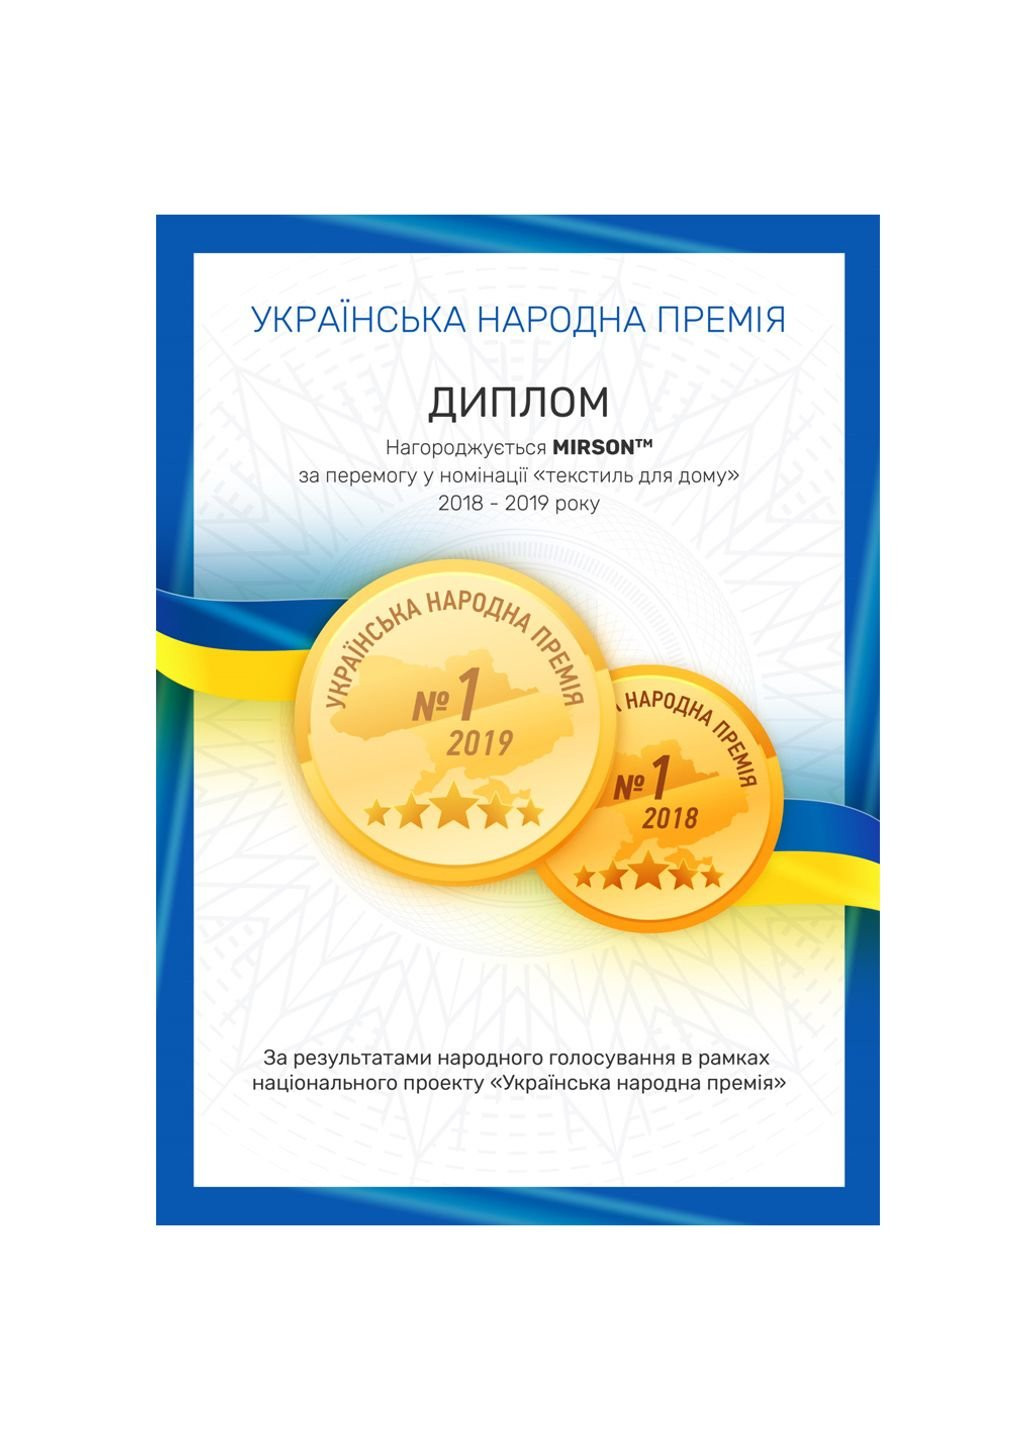 Mirson полотенце набор банный №5000 softness bordo 40x70, 50x90, 70x140, 100x (2200003183245) красный производство - Украина